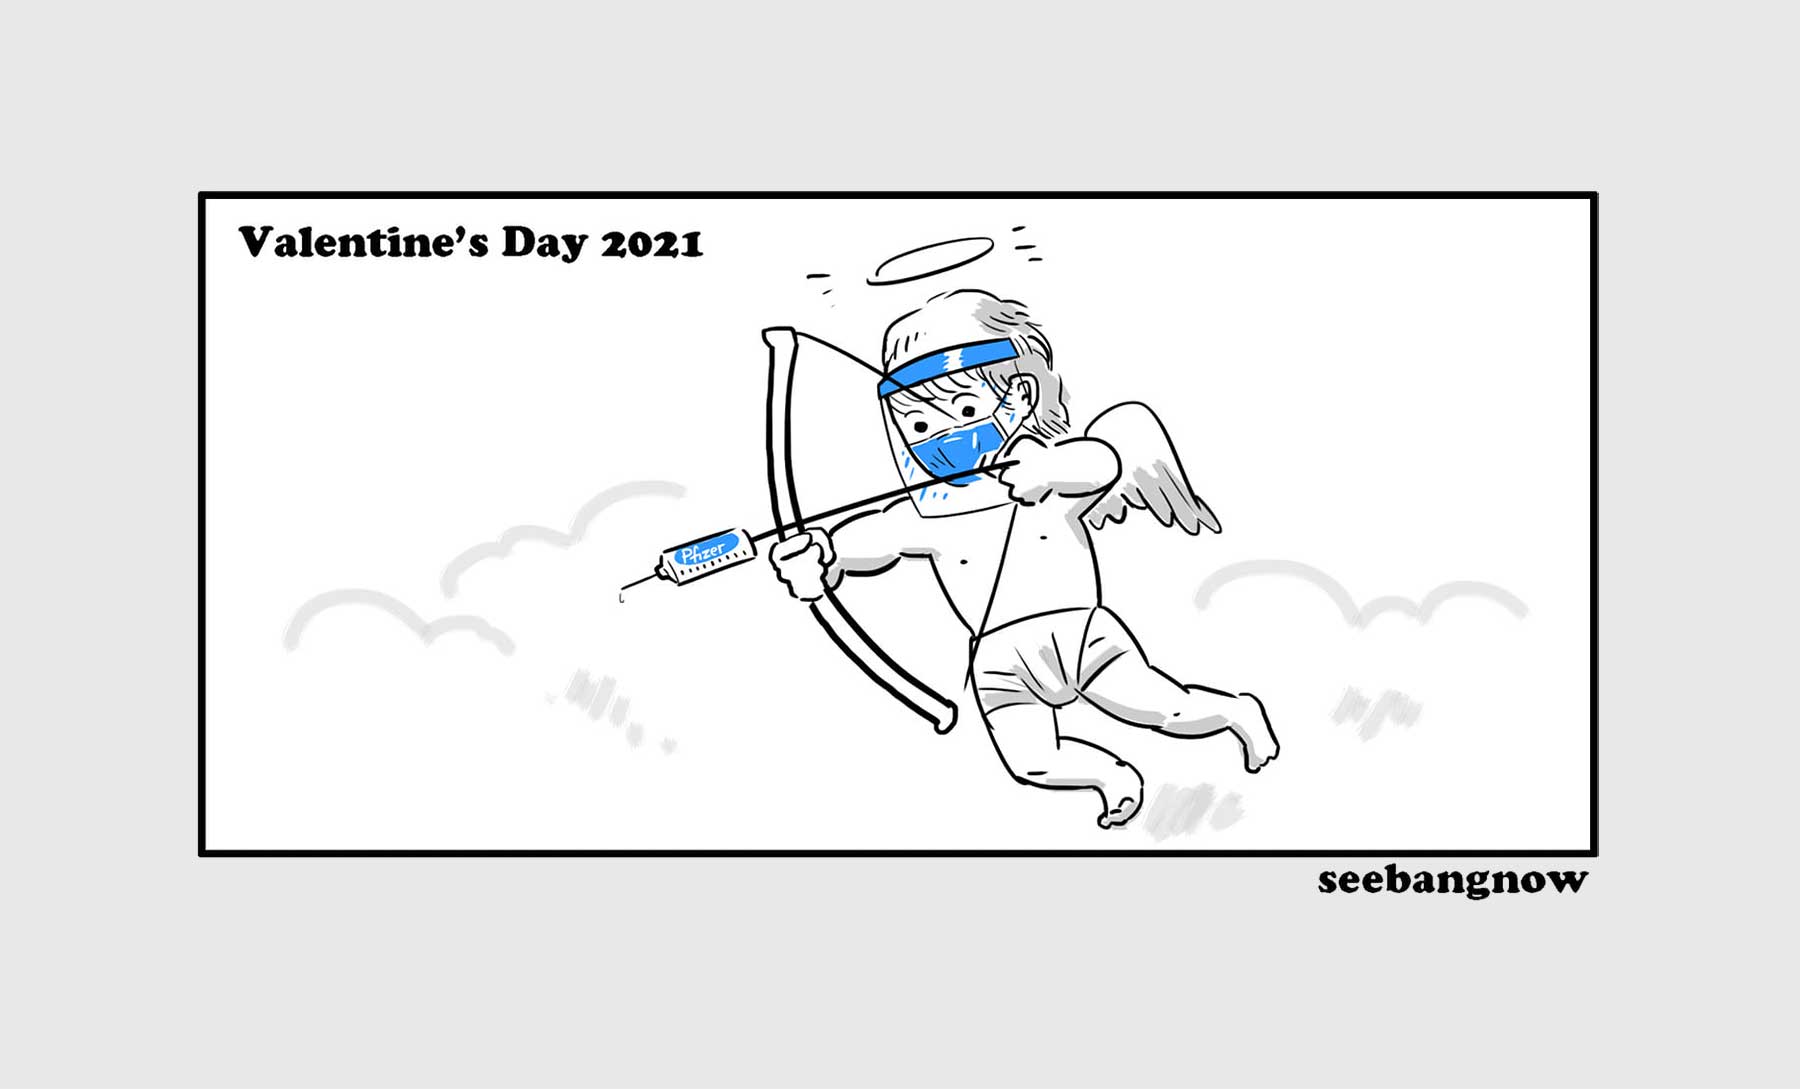 Humorvolle Webcomics von Xibang Xibang-aka-seebangnow 